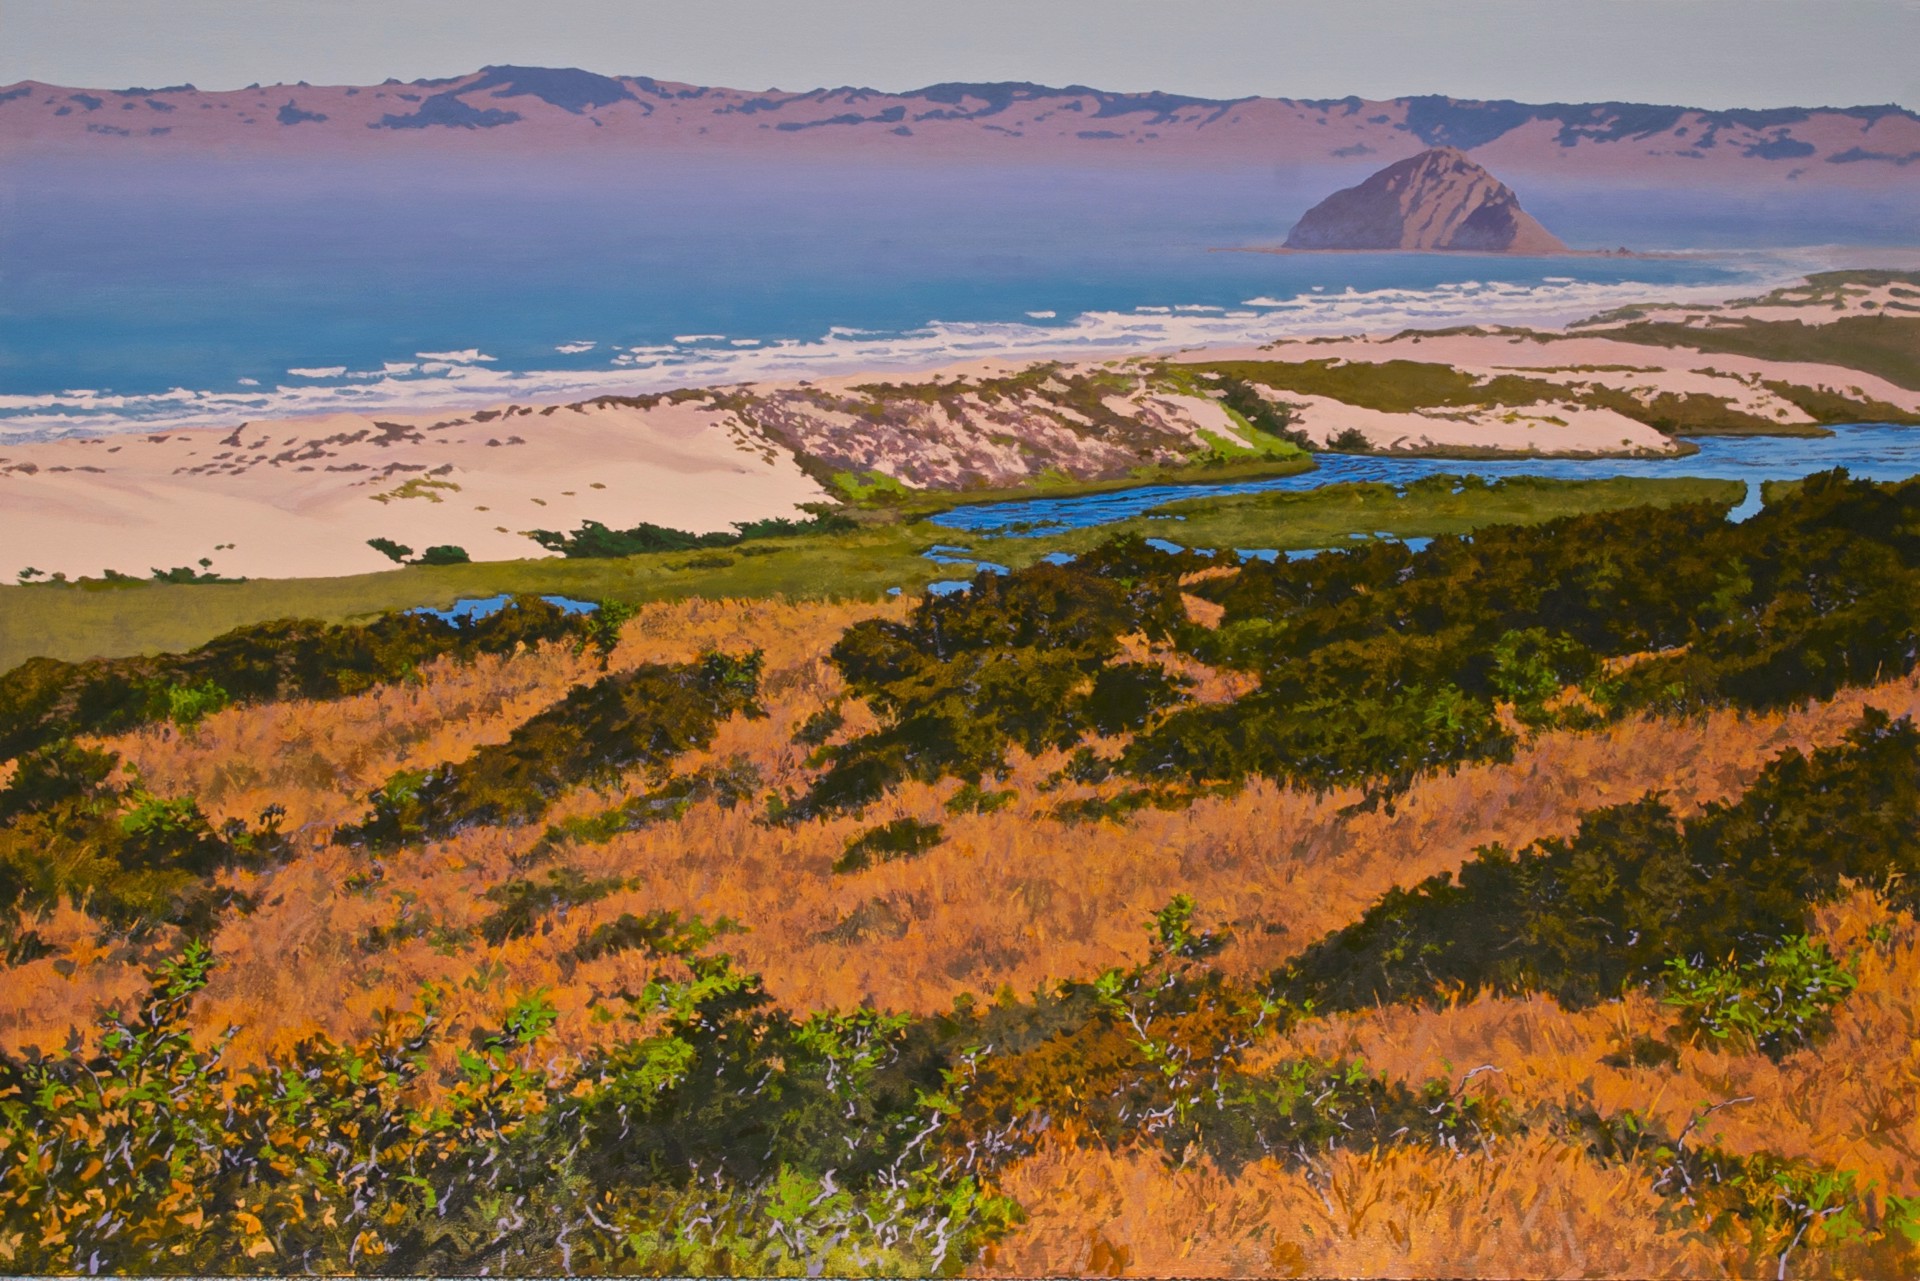 Dunes at Morro Bay by Peter Loftus